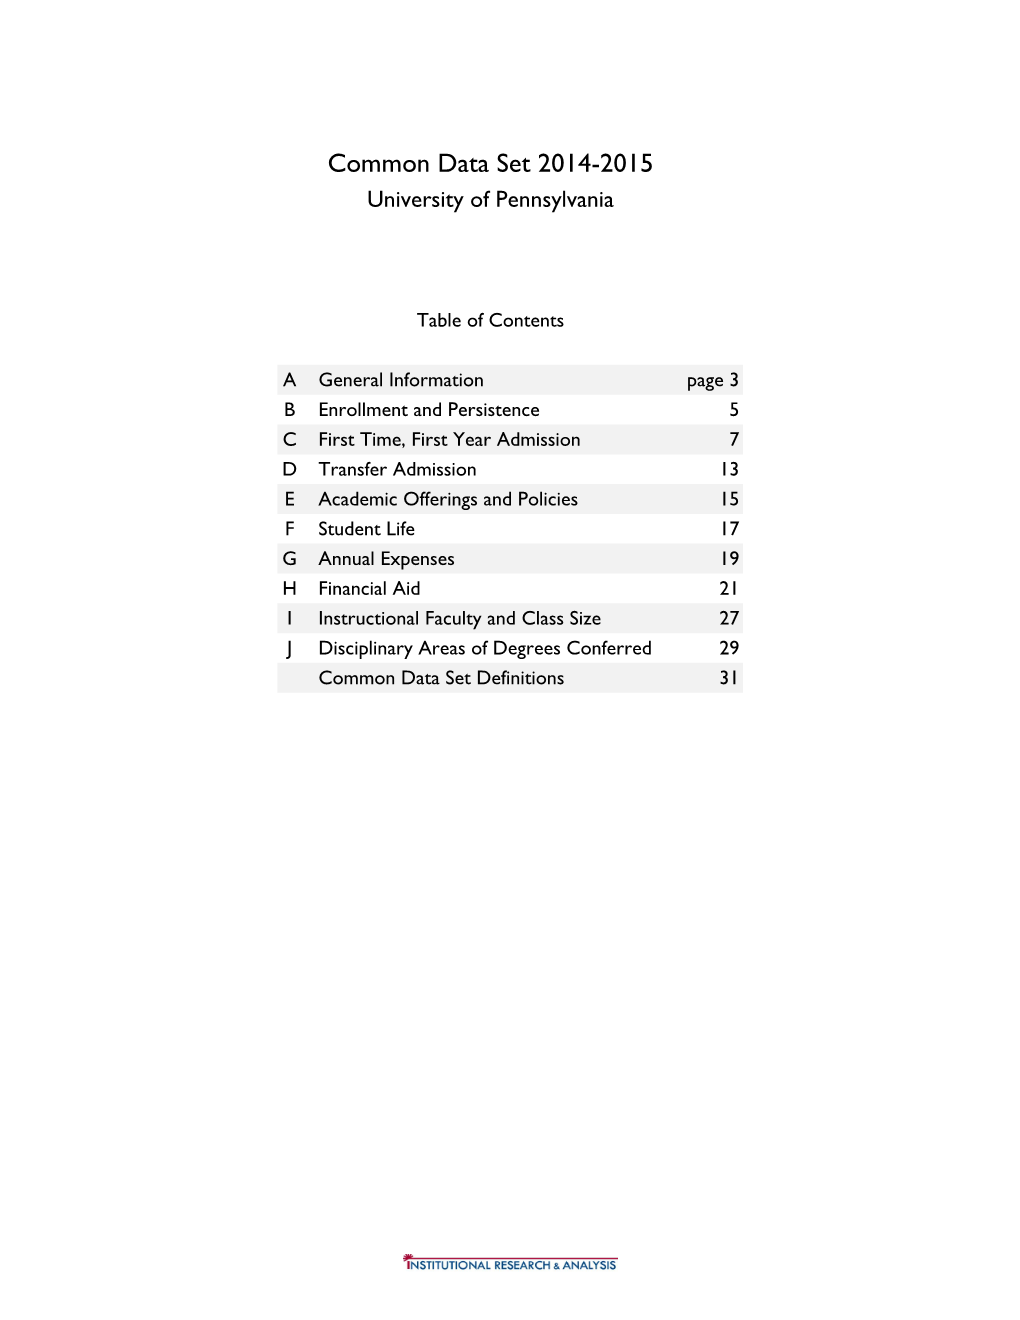 Common Data Set 2014-2015 University of Pennsylvania